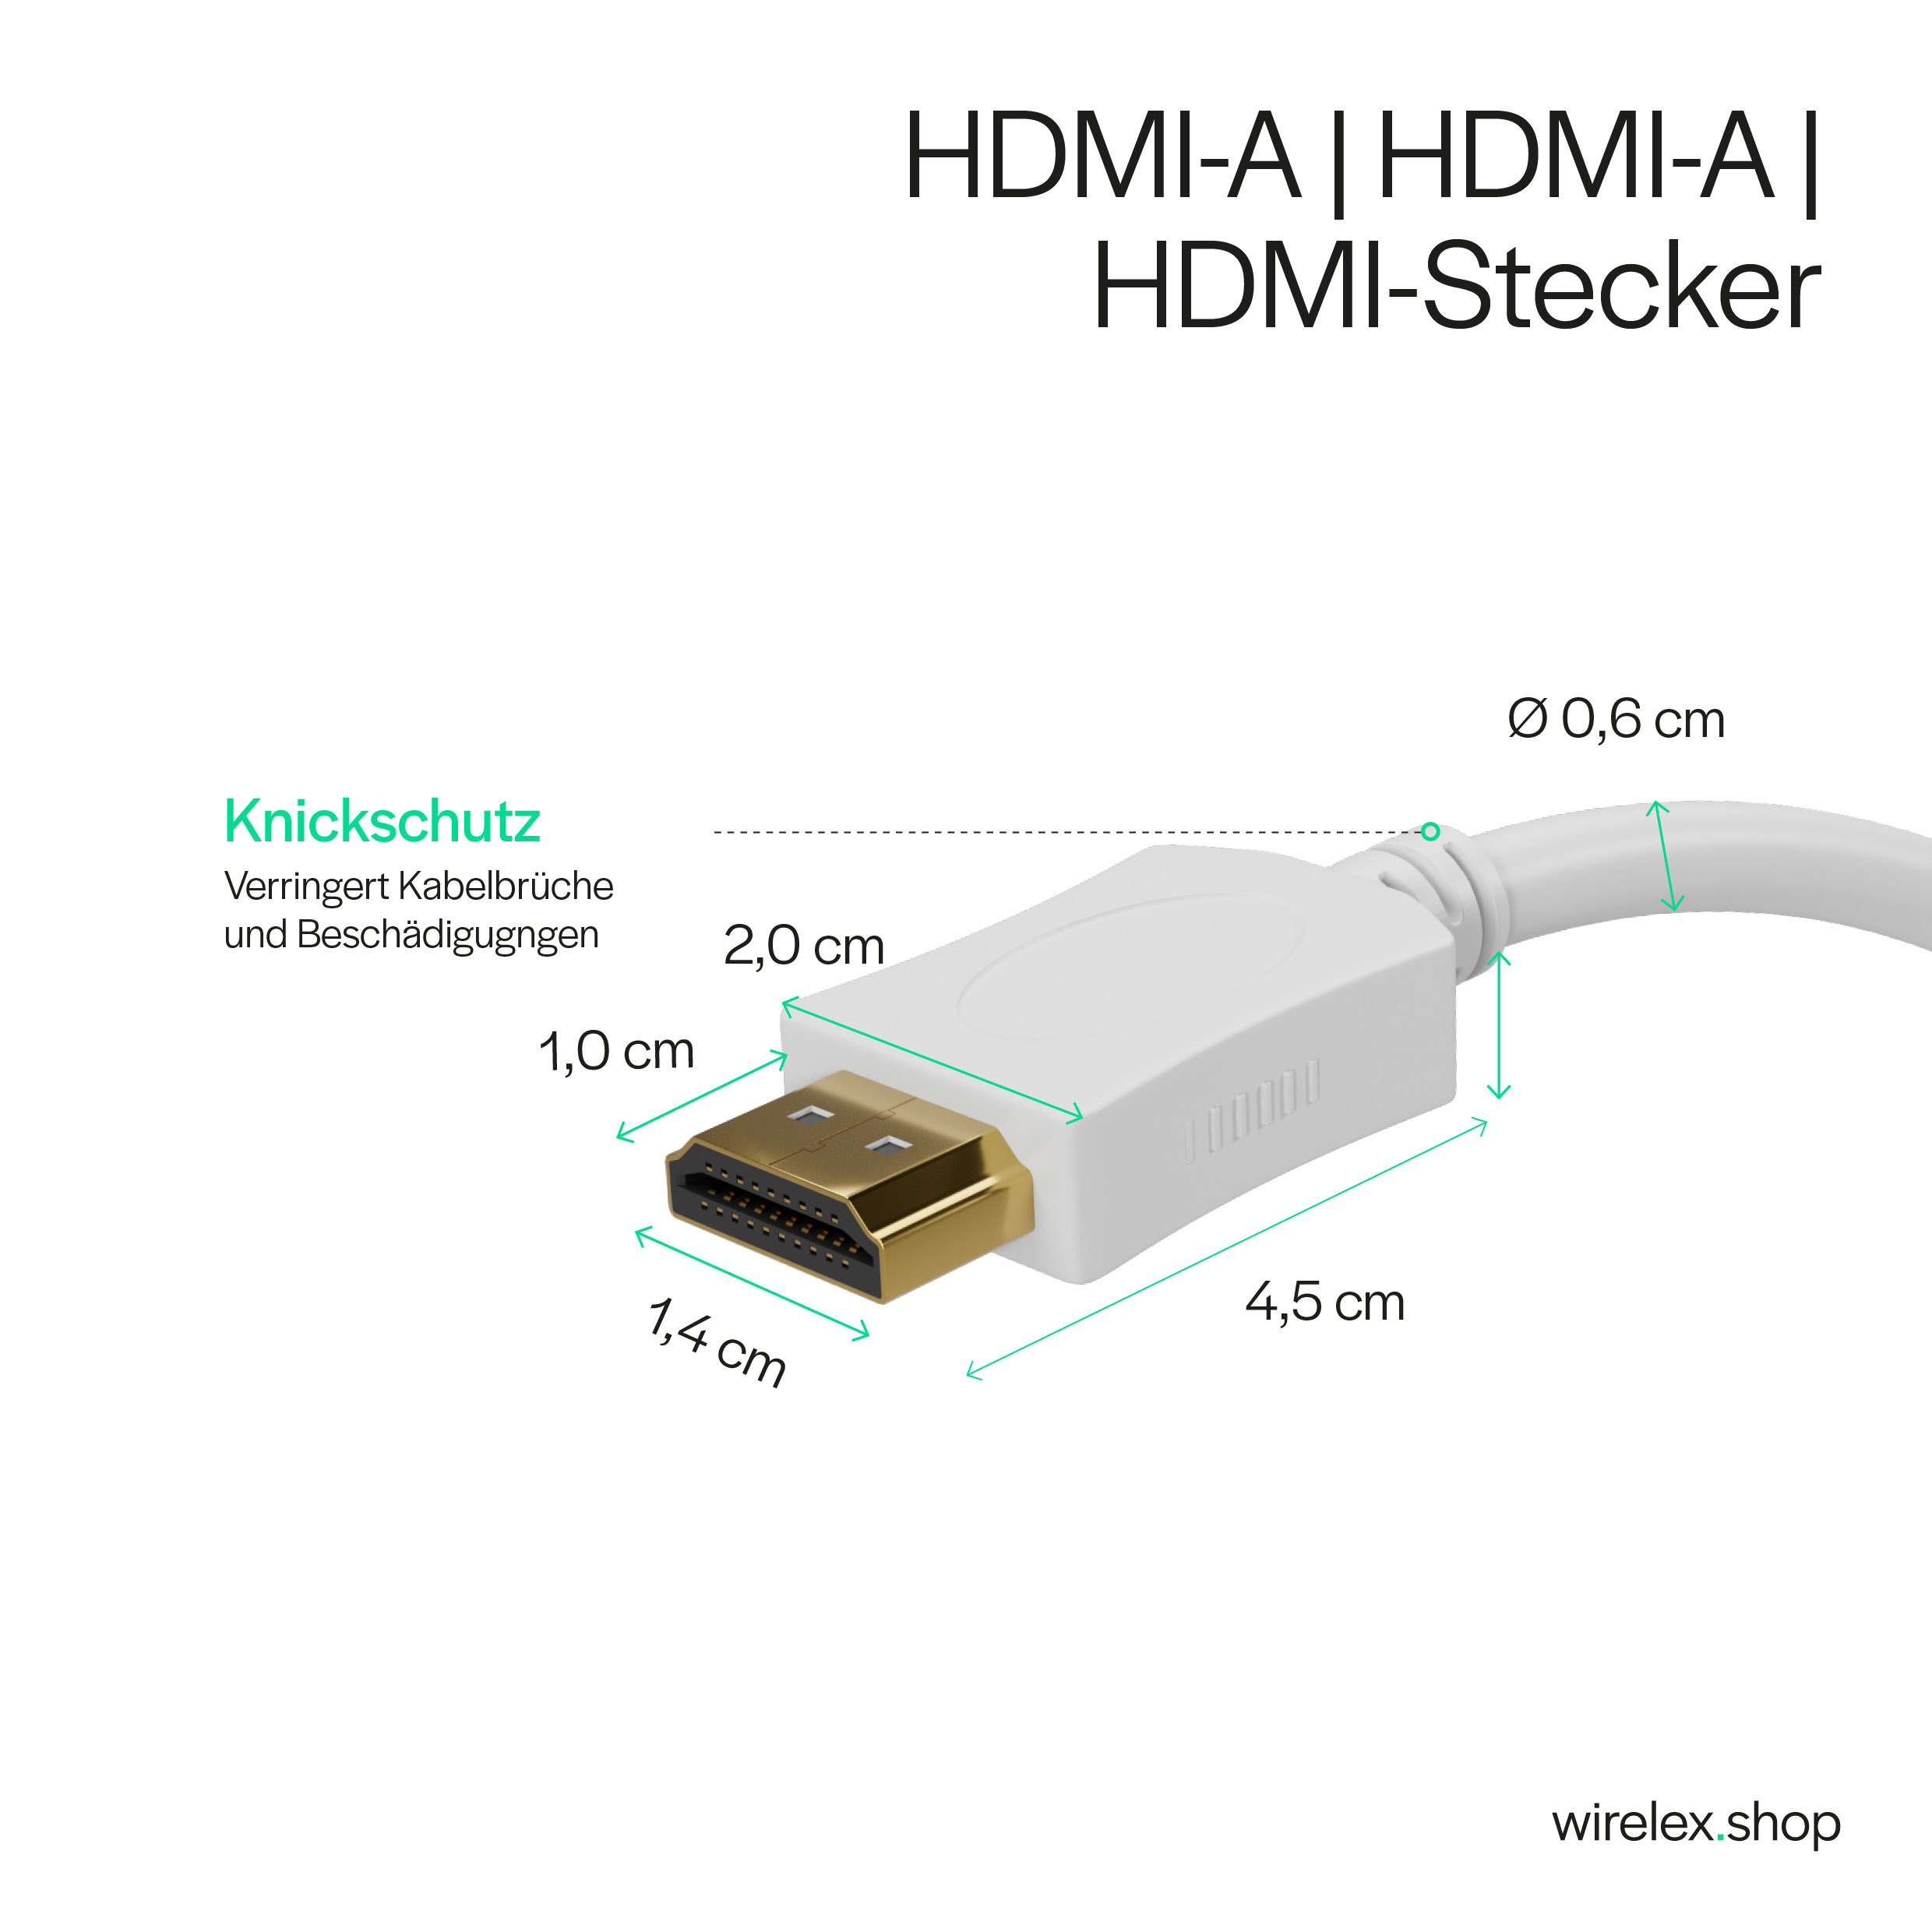 3m A-Stecker A-Stecker/HDMI HEAC HDMI Kabel HDMI weiß verg. KABELBUDE